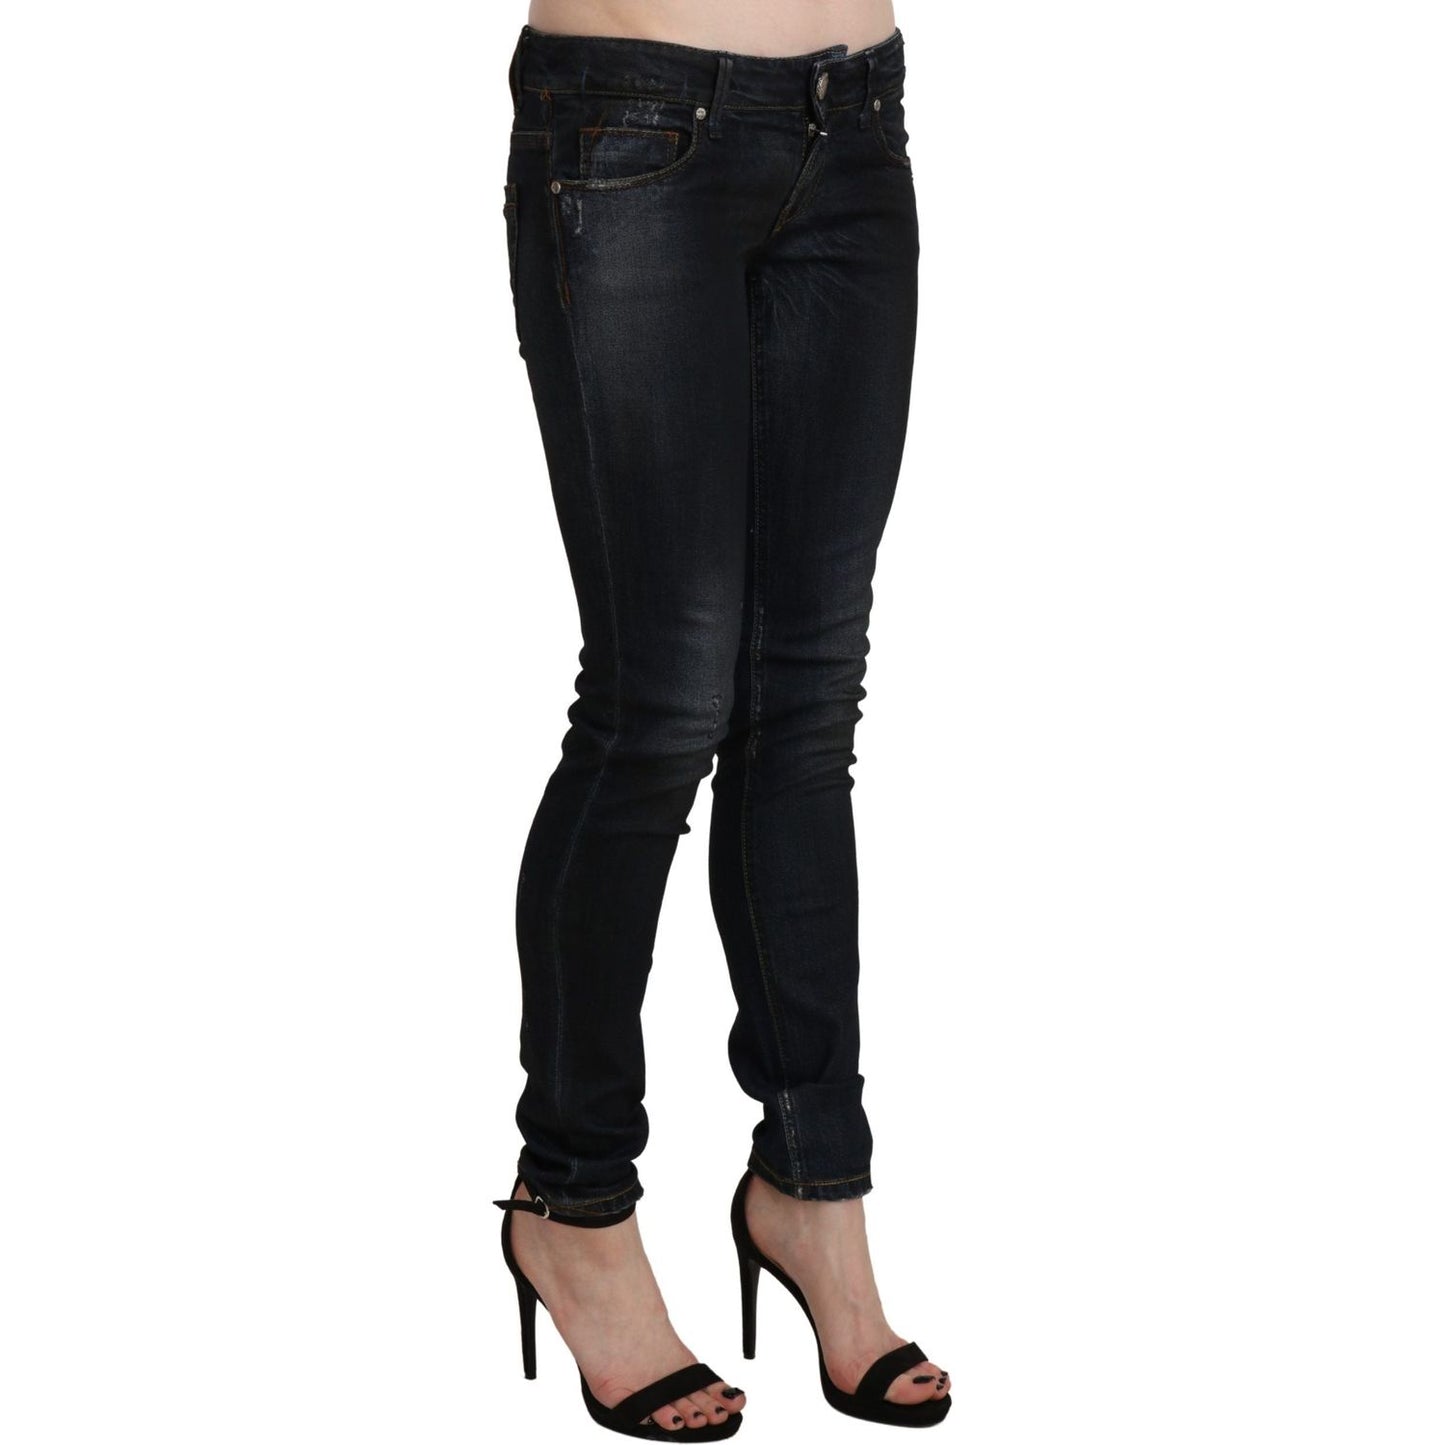 Acht Chic Low Waist Skinny Black Jeans Jeans & Pants black-washed-low-waist-skinny-denim-jeans